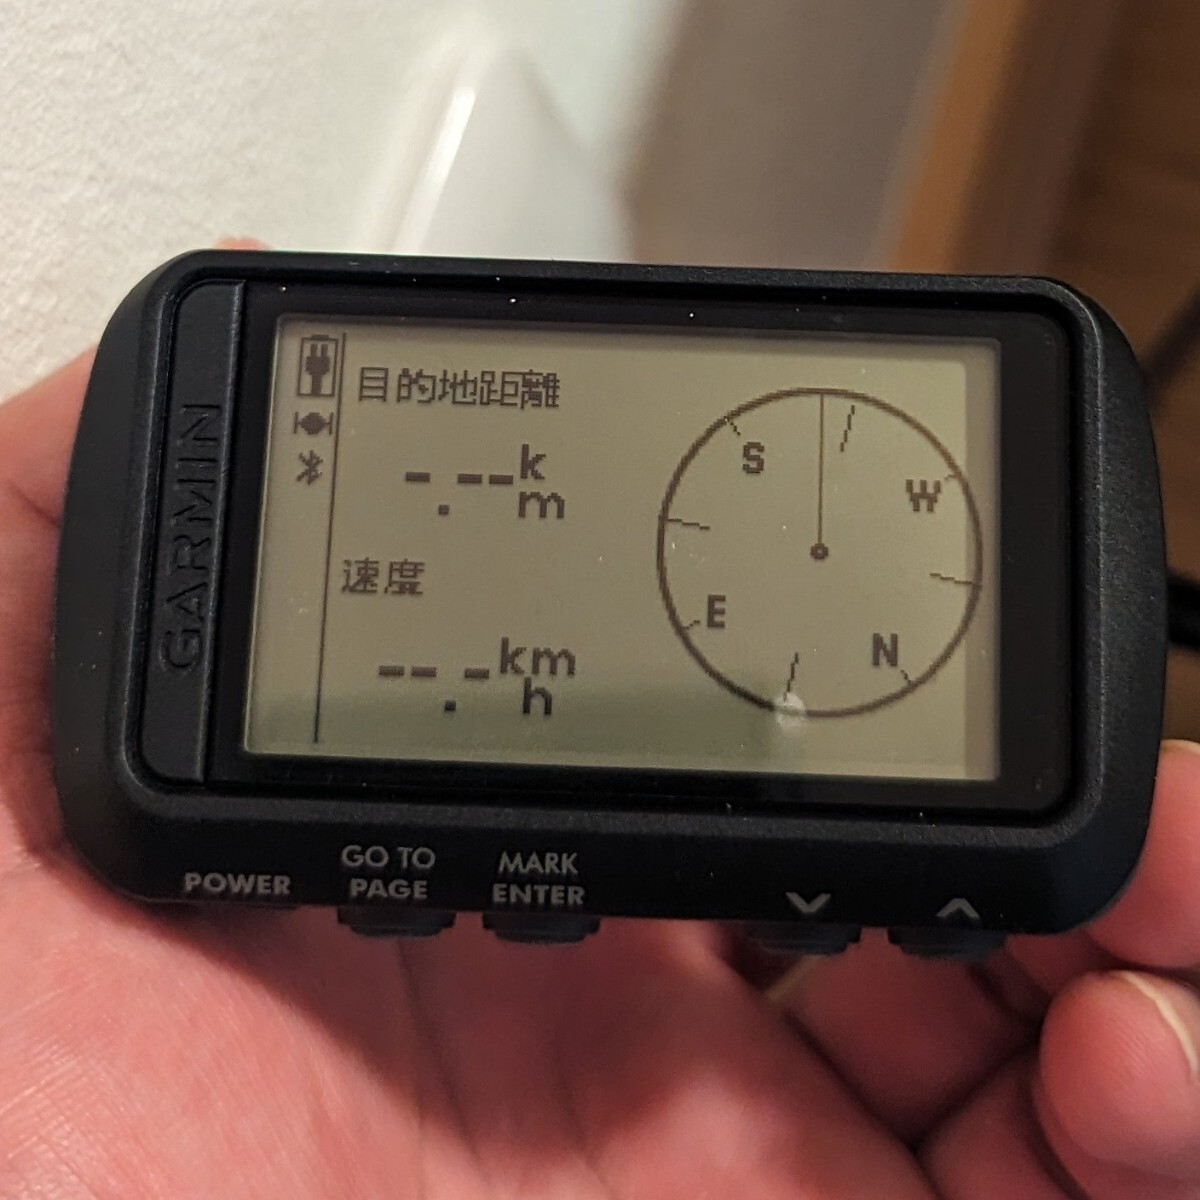 GARMIN foretrex601 GPS Garmin Navigator Japanese edition trekking foa Trek s airsoft Japanese display body only 